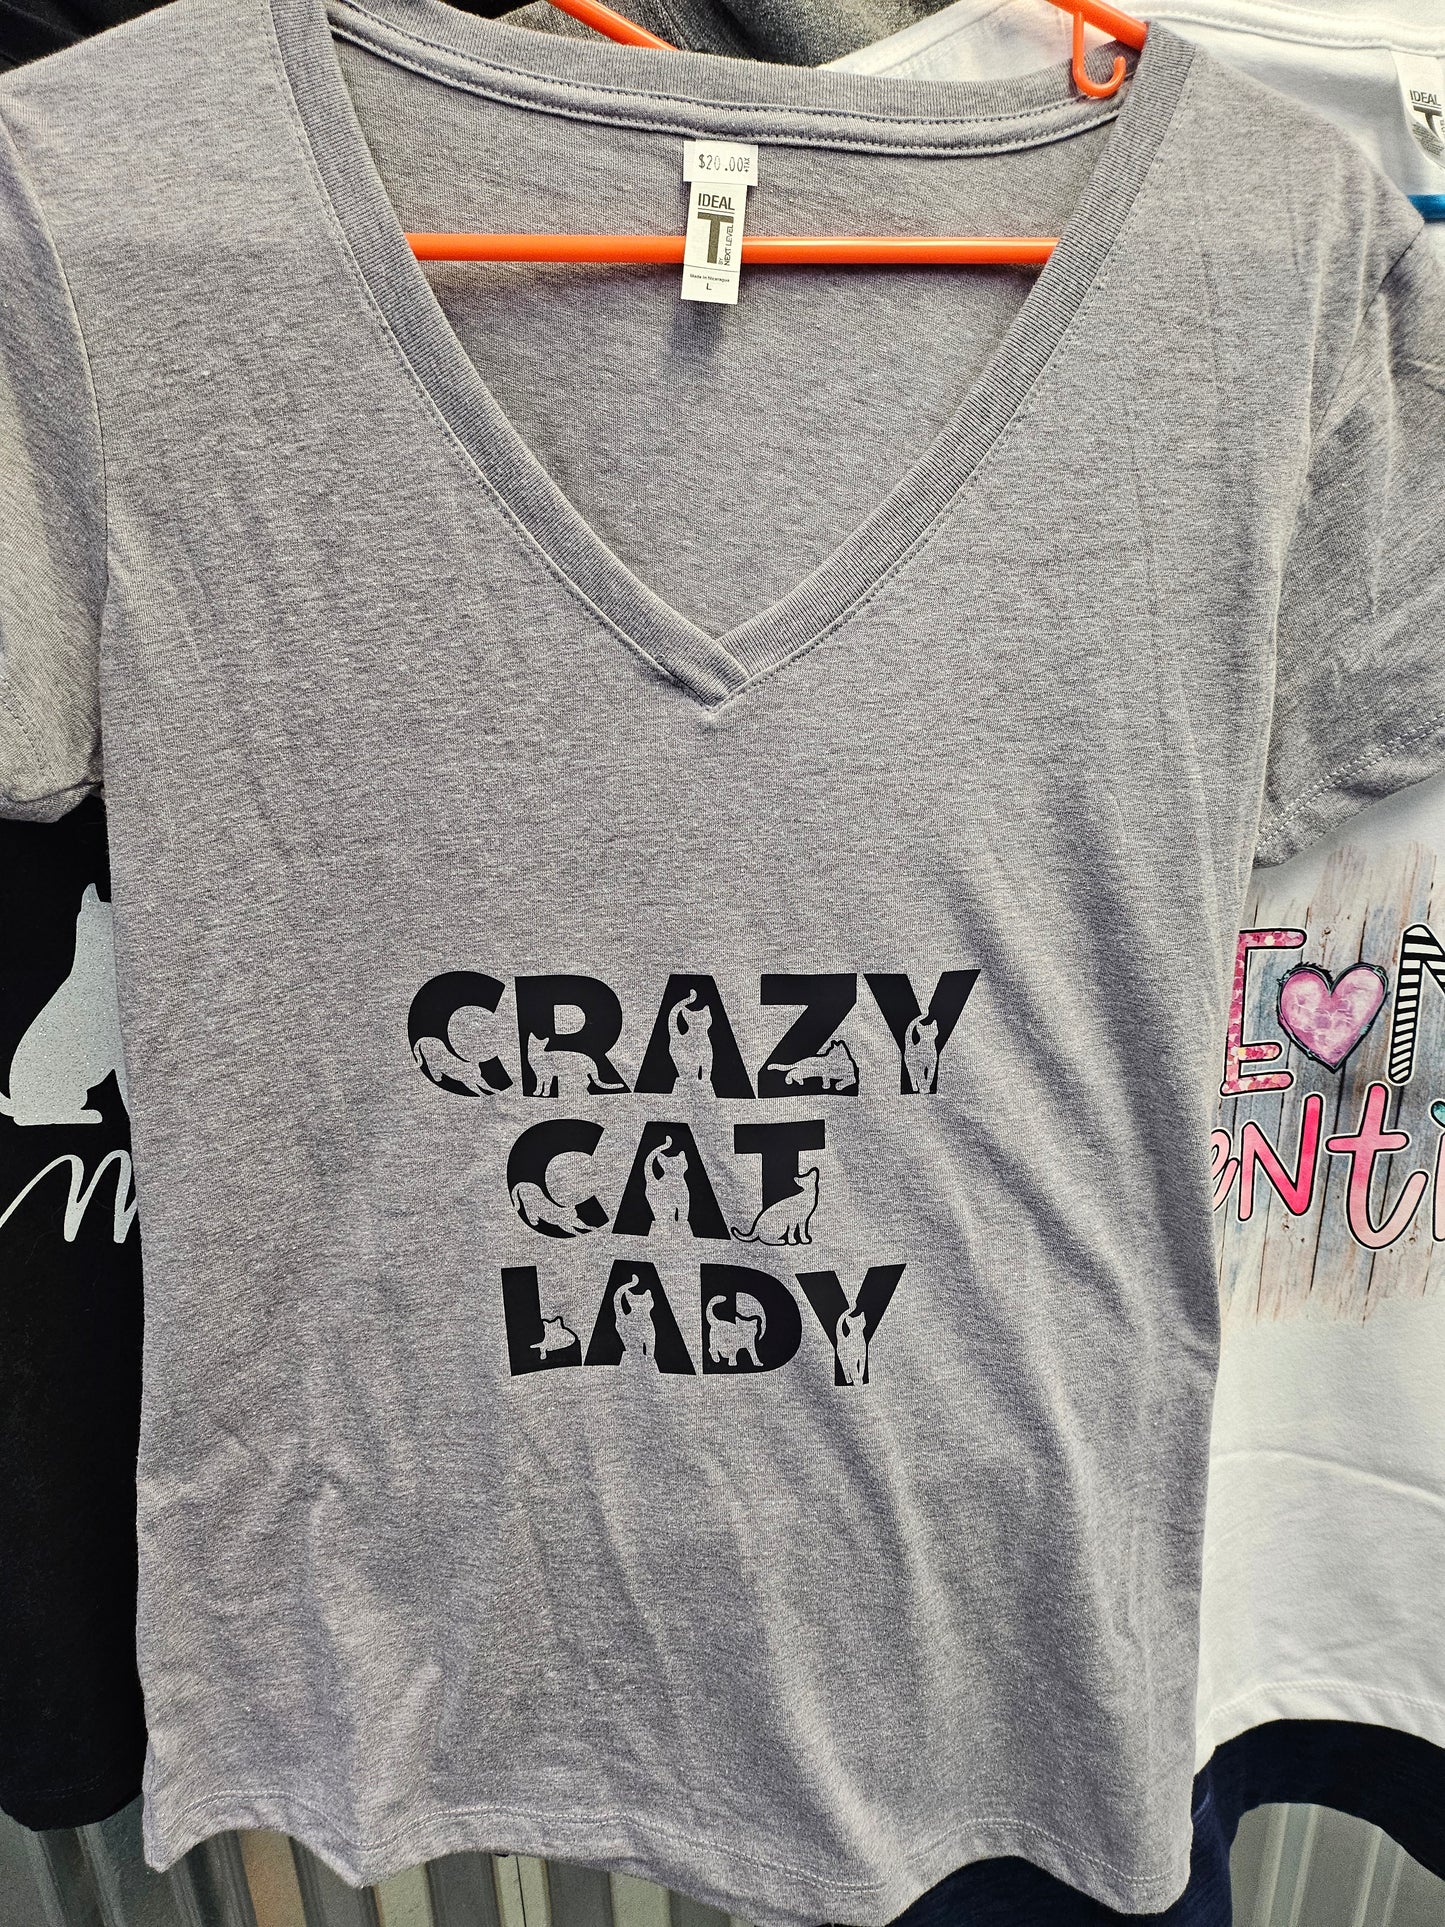 Crazy cat lady t-shirt